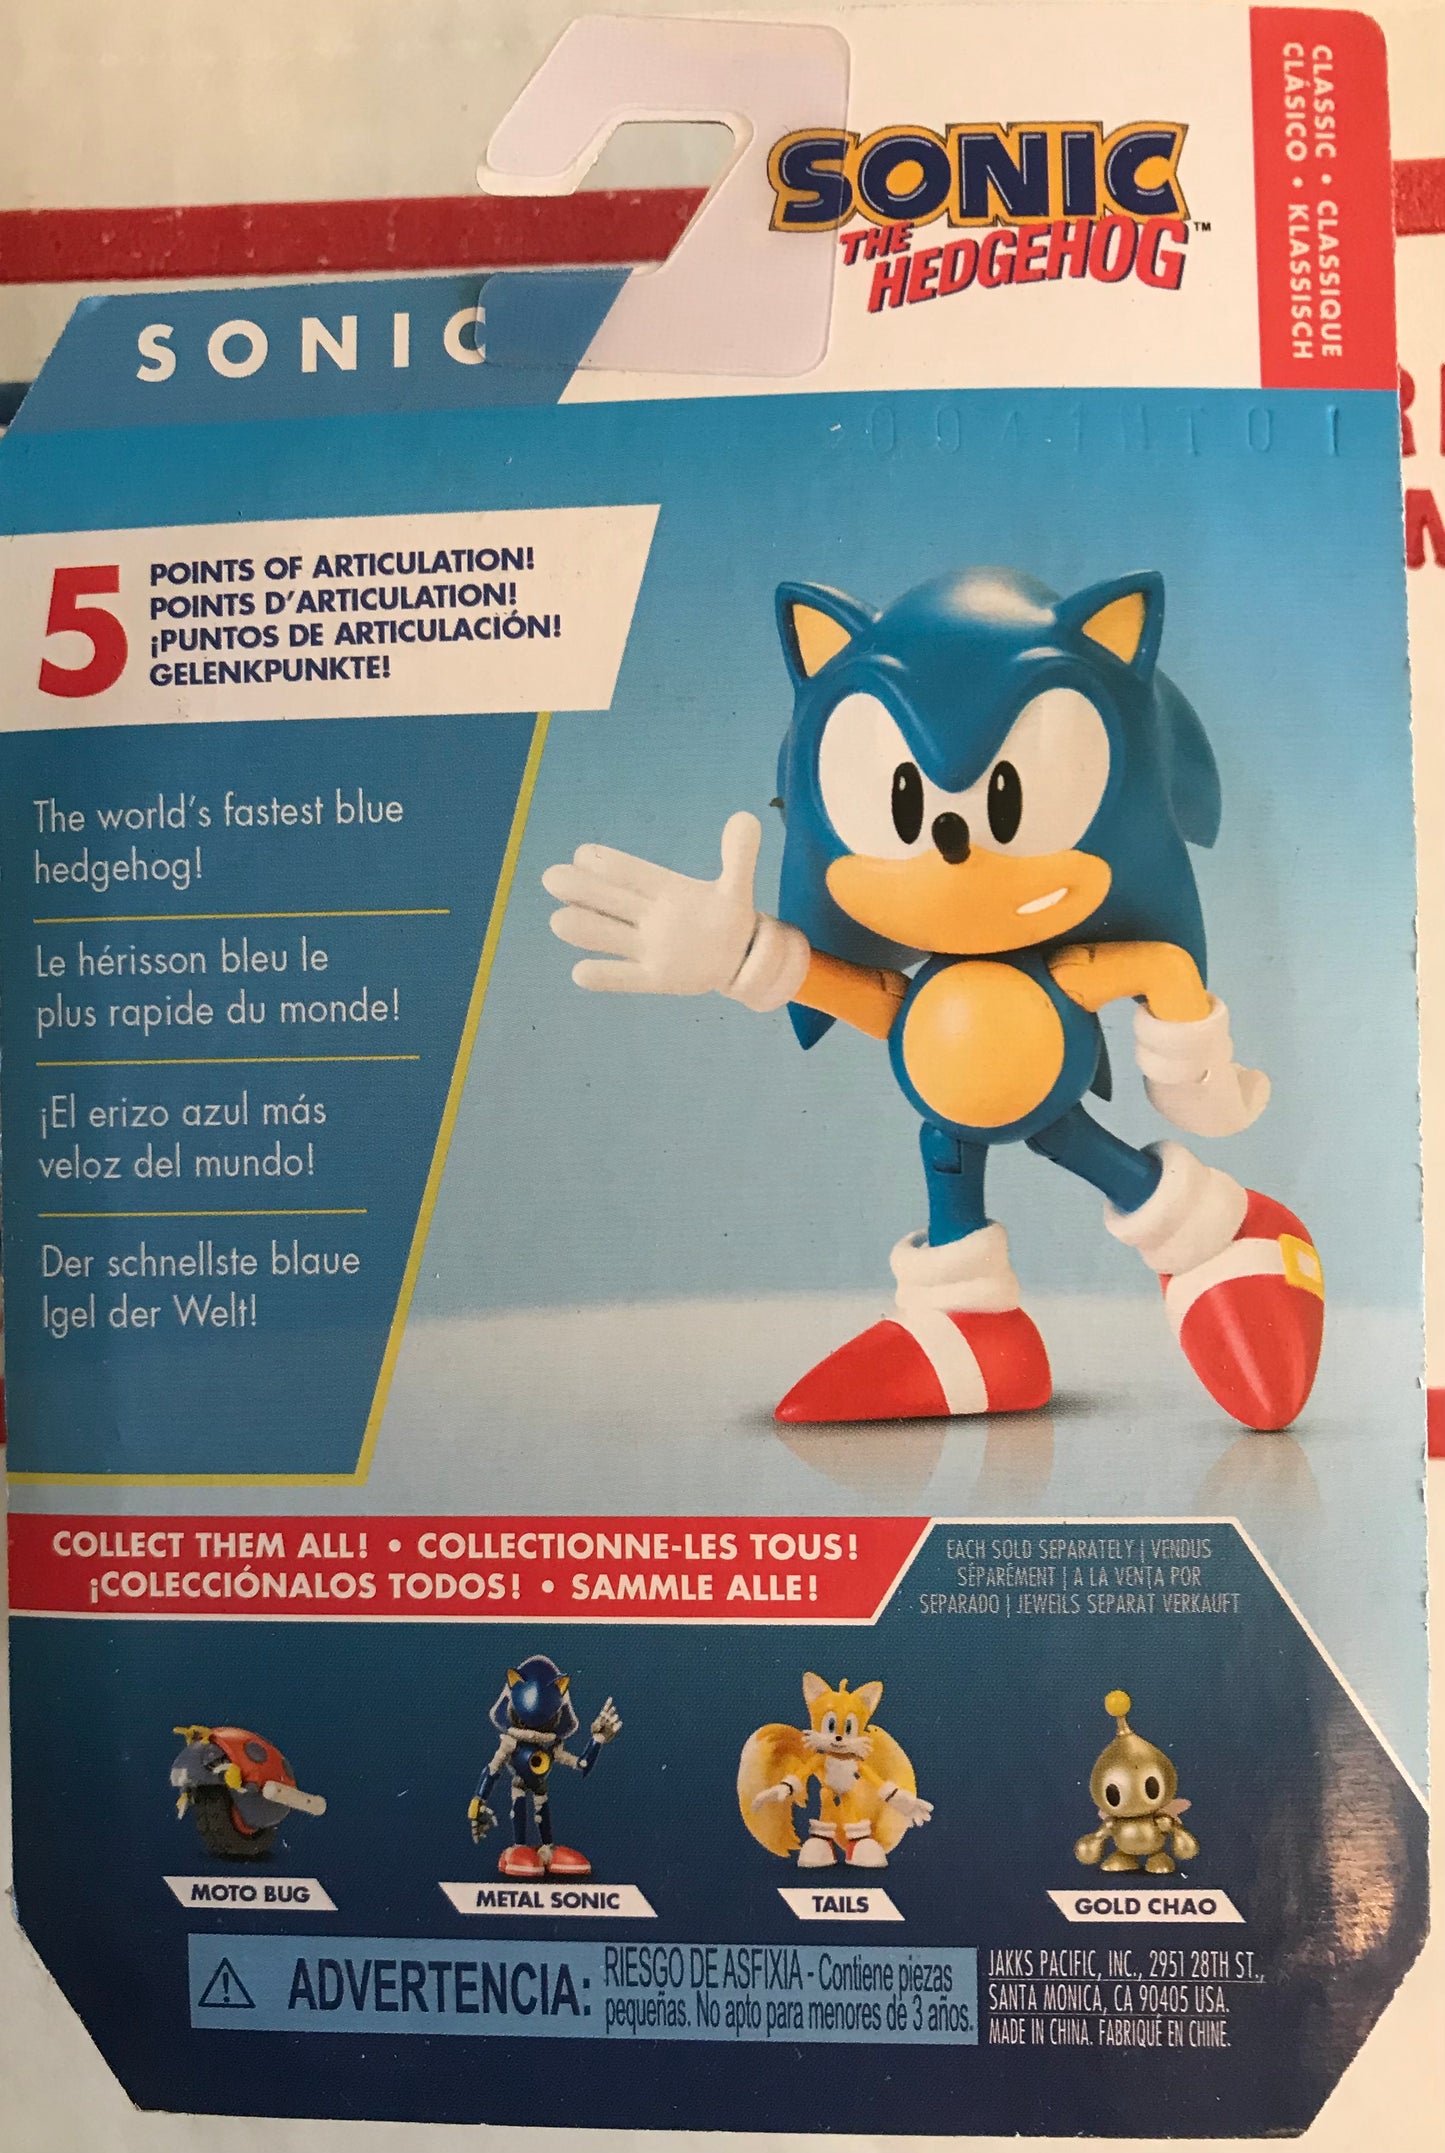 Jakks Sonic 2.5" Inch Articulated Figure Wave 3 Classic Sonic